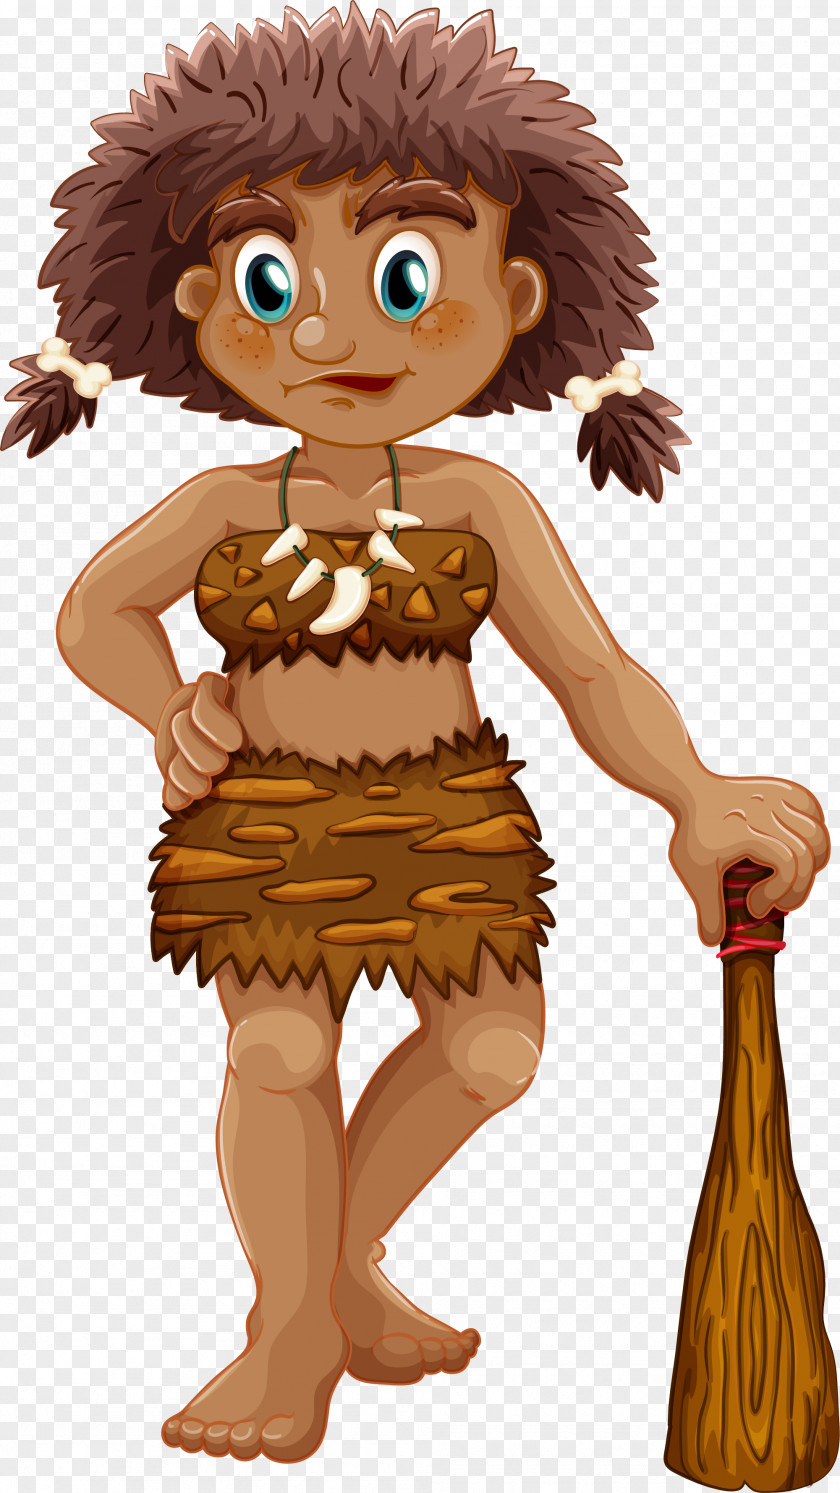 Cartoon Character Woman Royalty-free Stock Illustration PNG